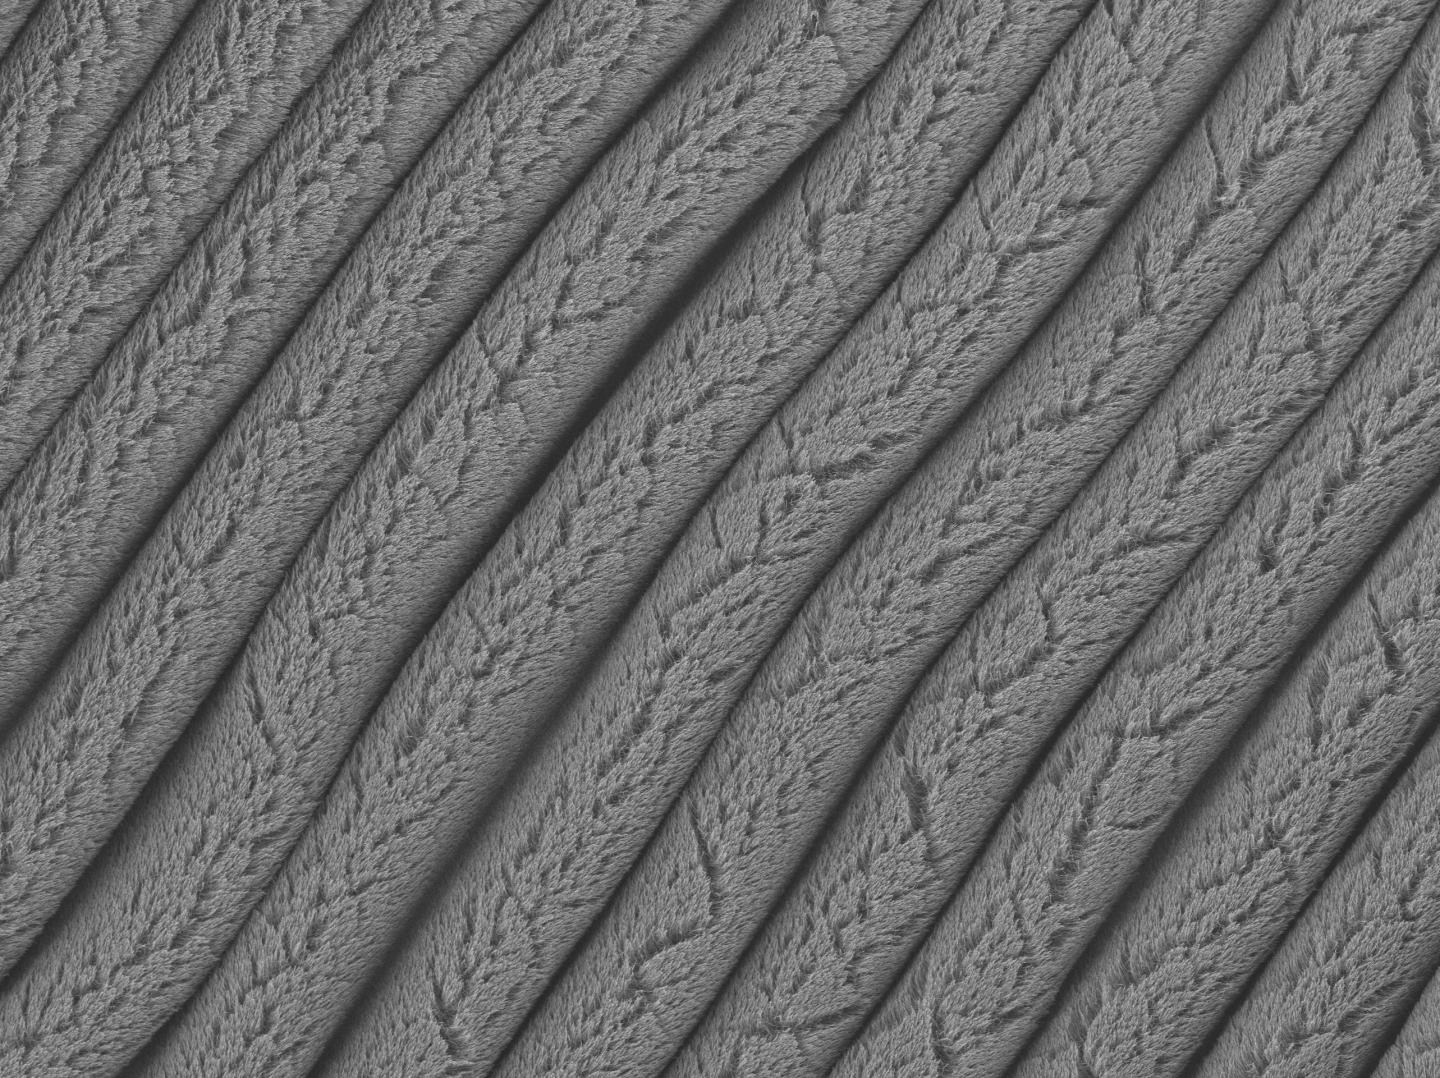 Nanotube Fields